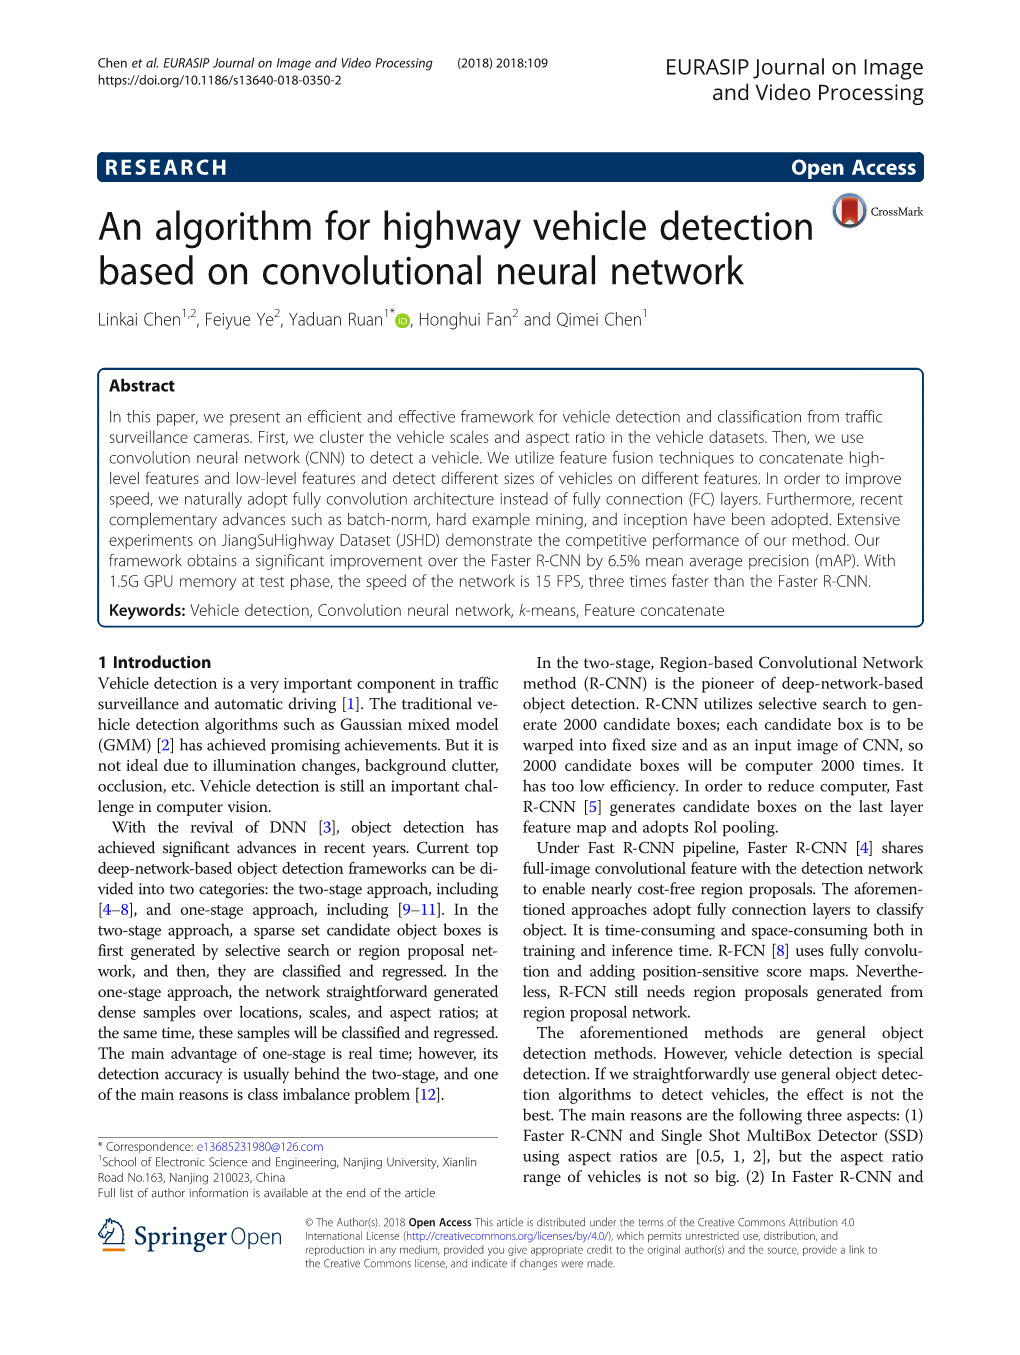 An Algorithm for Highway Vehicle Detection Based on Convolutional Neural Network Linkai Chen1,2, Feiyue Ye2, Yaduan Ruan1* , Honghui Fan2 and Qimei Chen1